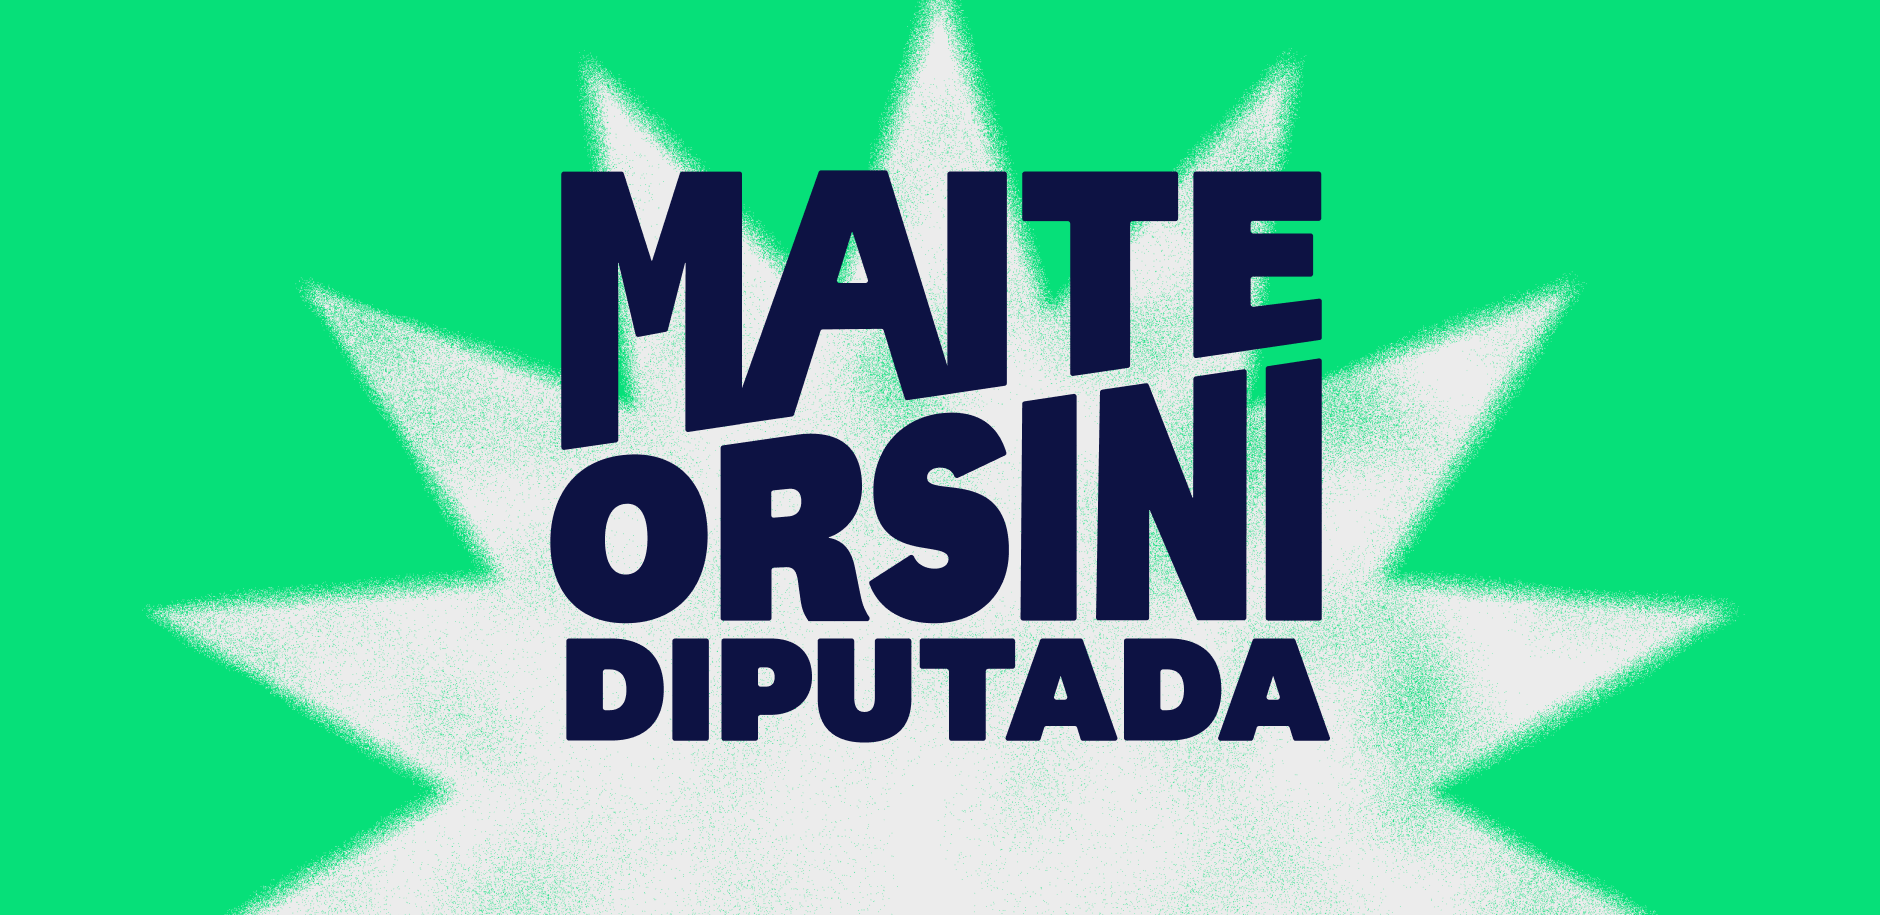 Maite Orsini Diputada navy logo with white burst on bright green background